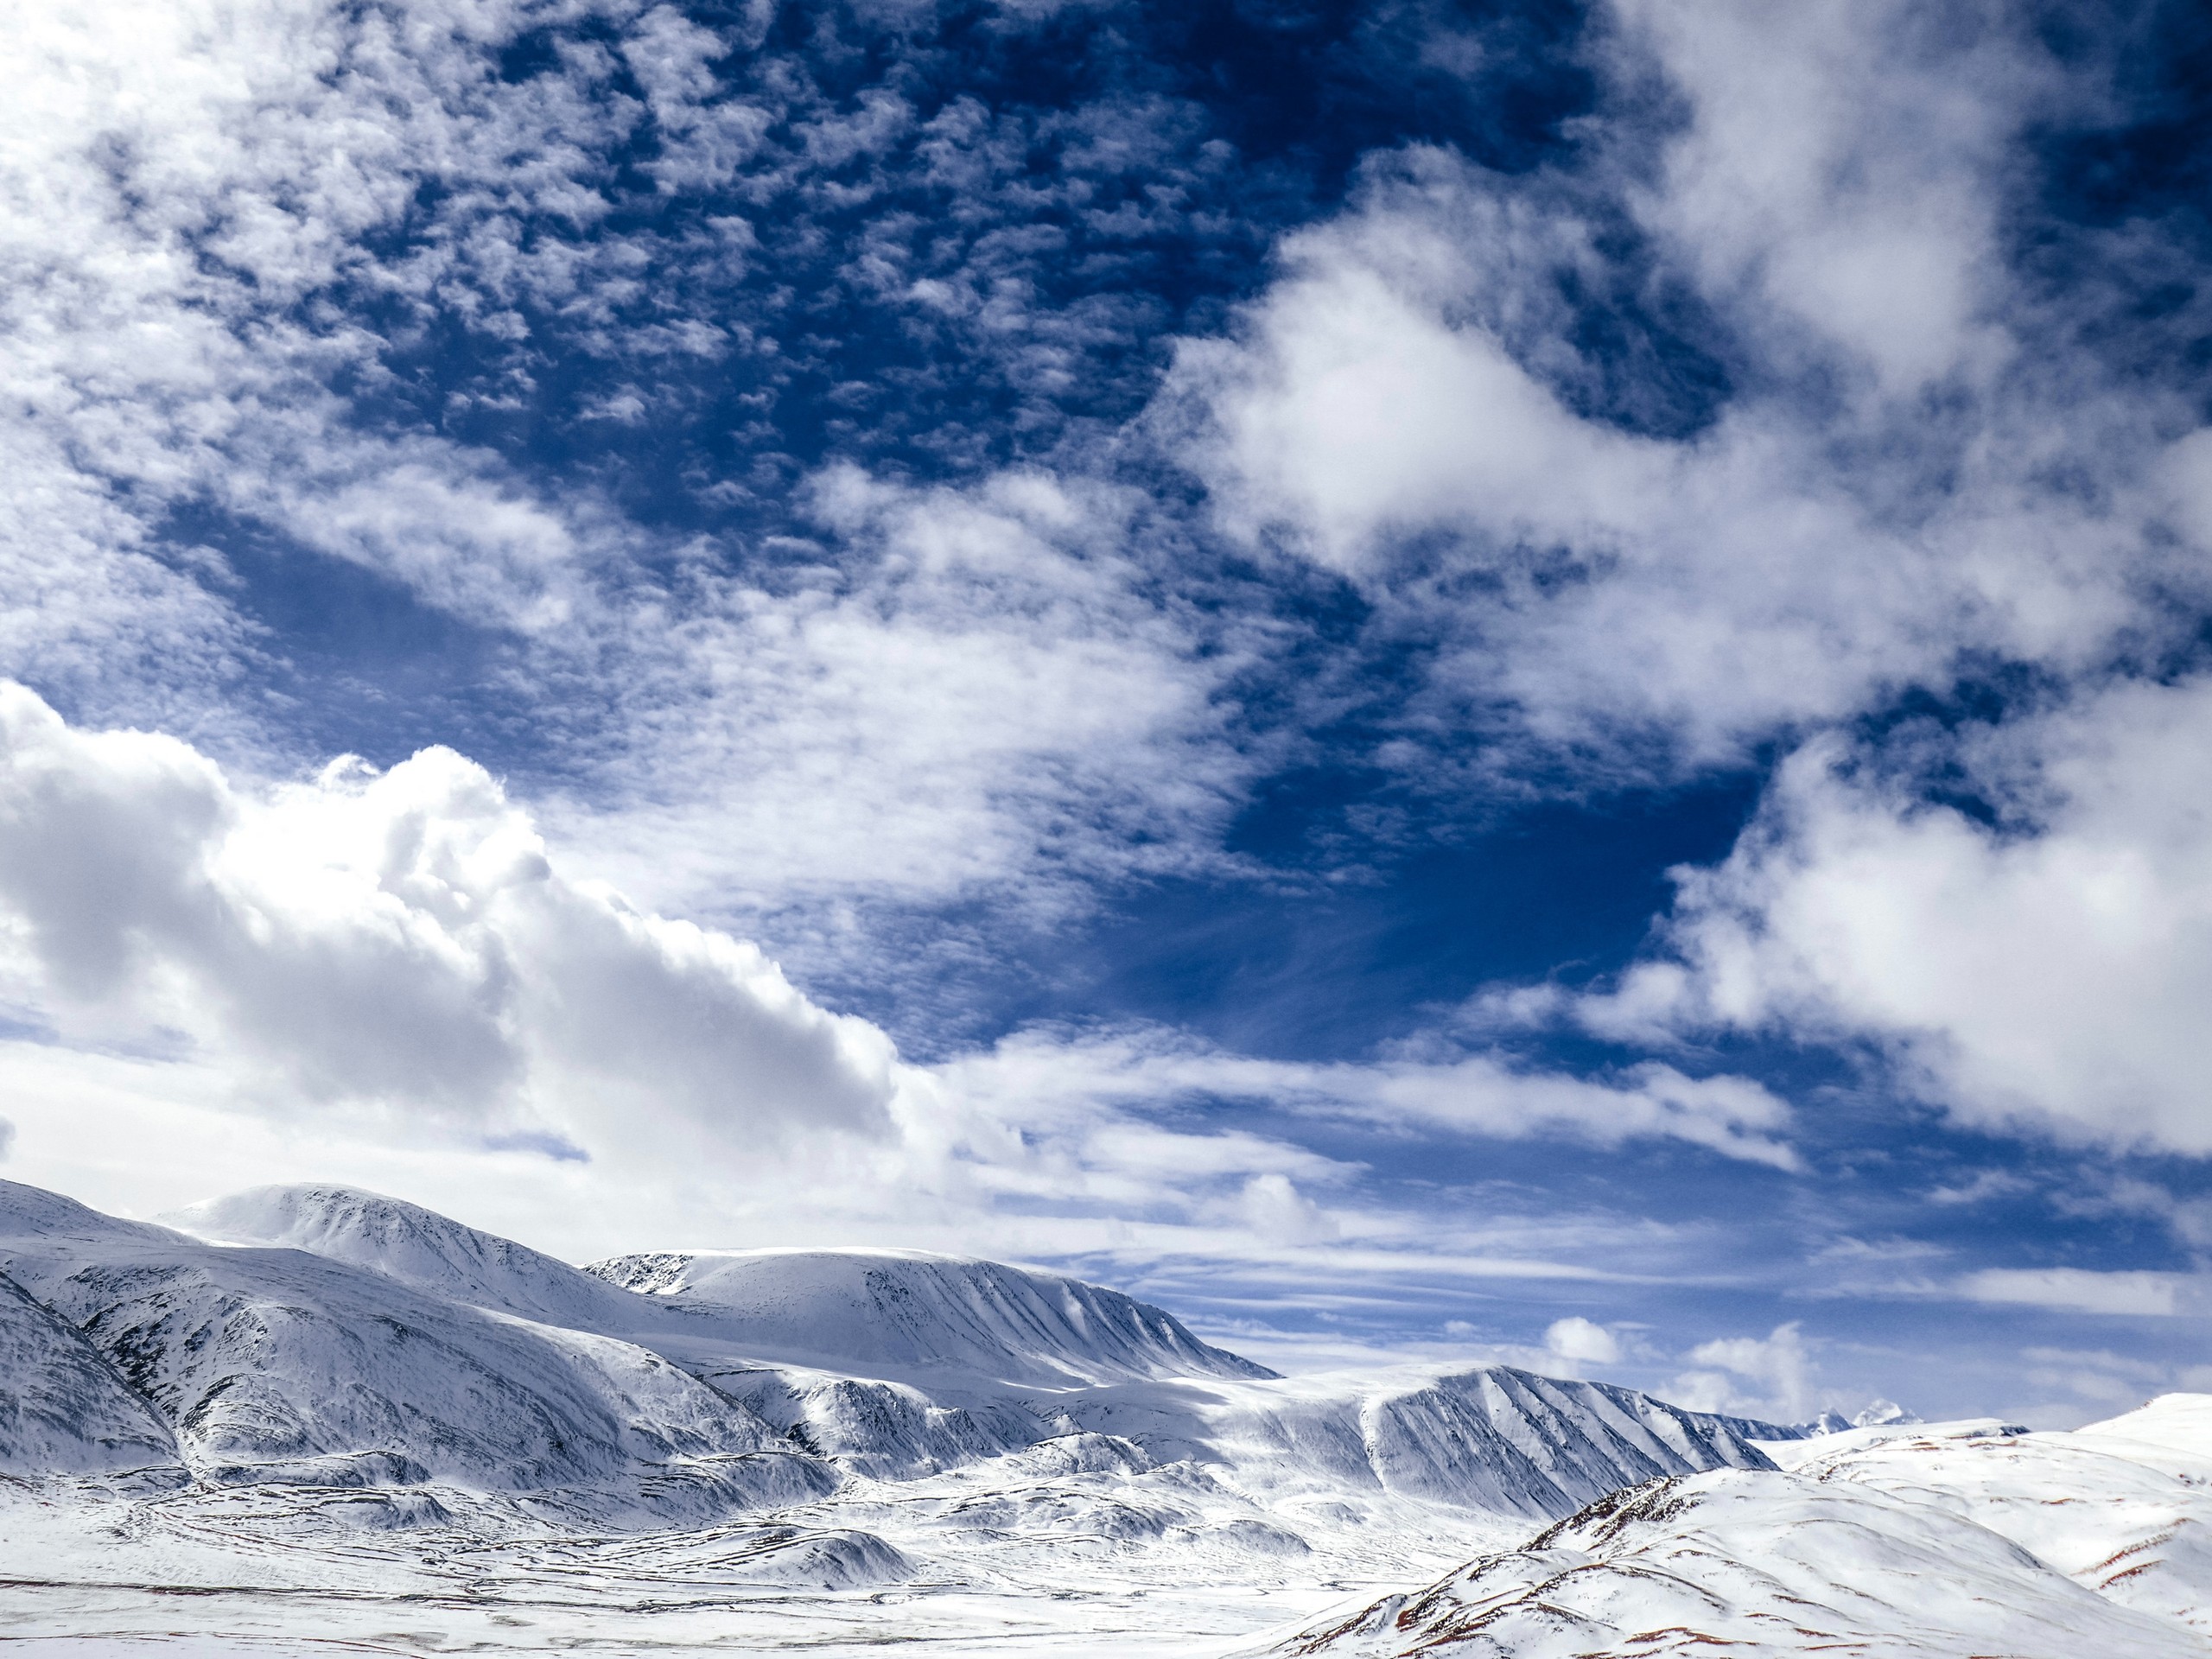 Snowy peaks seen in national park in Mongolia